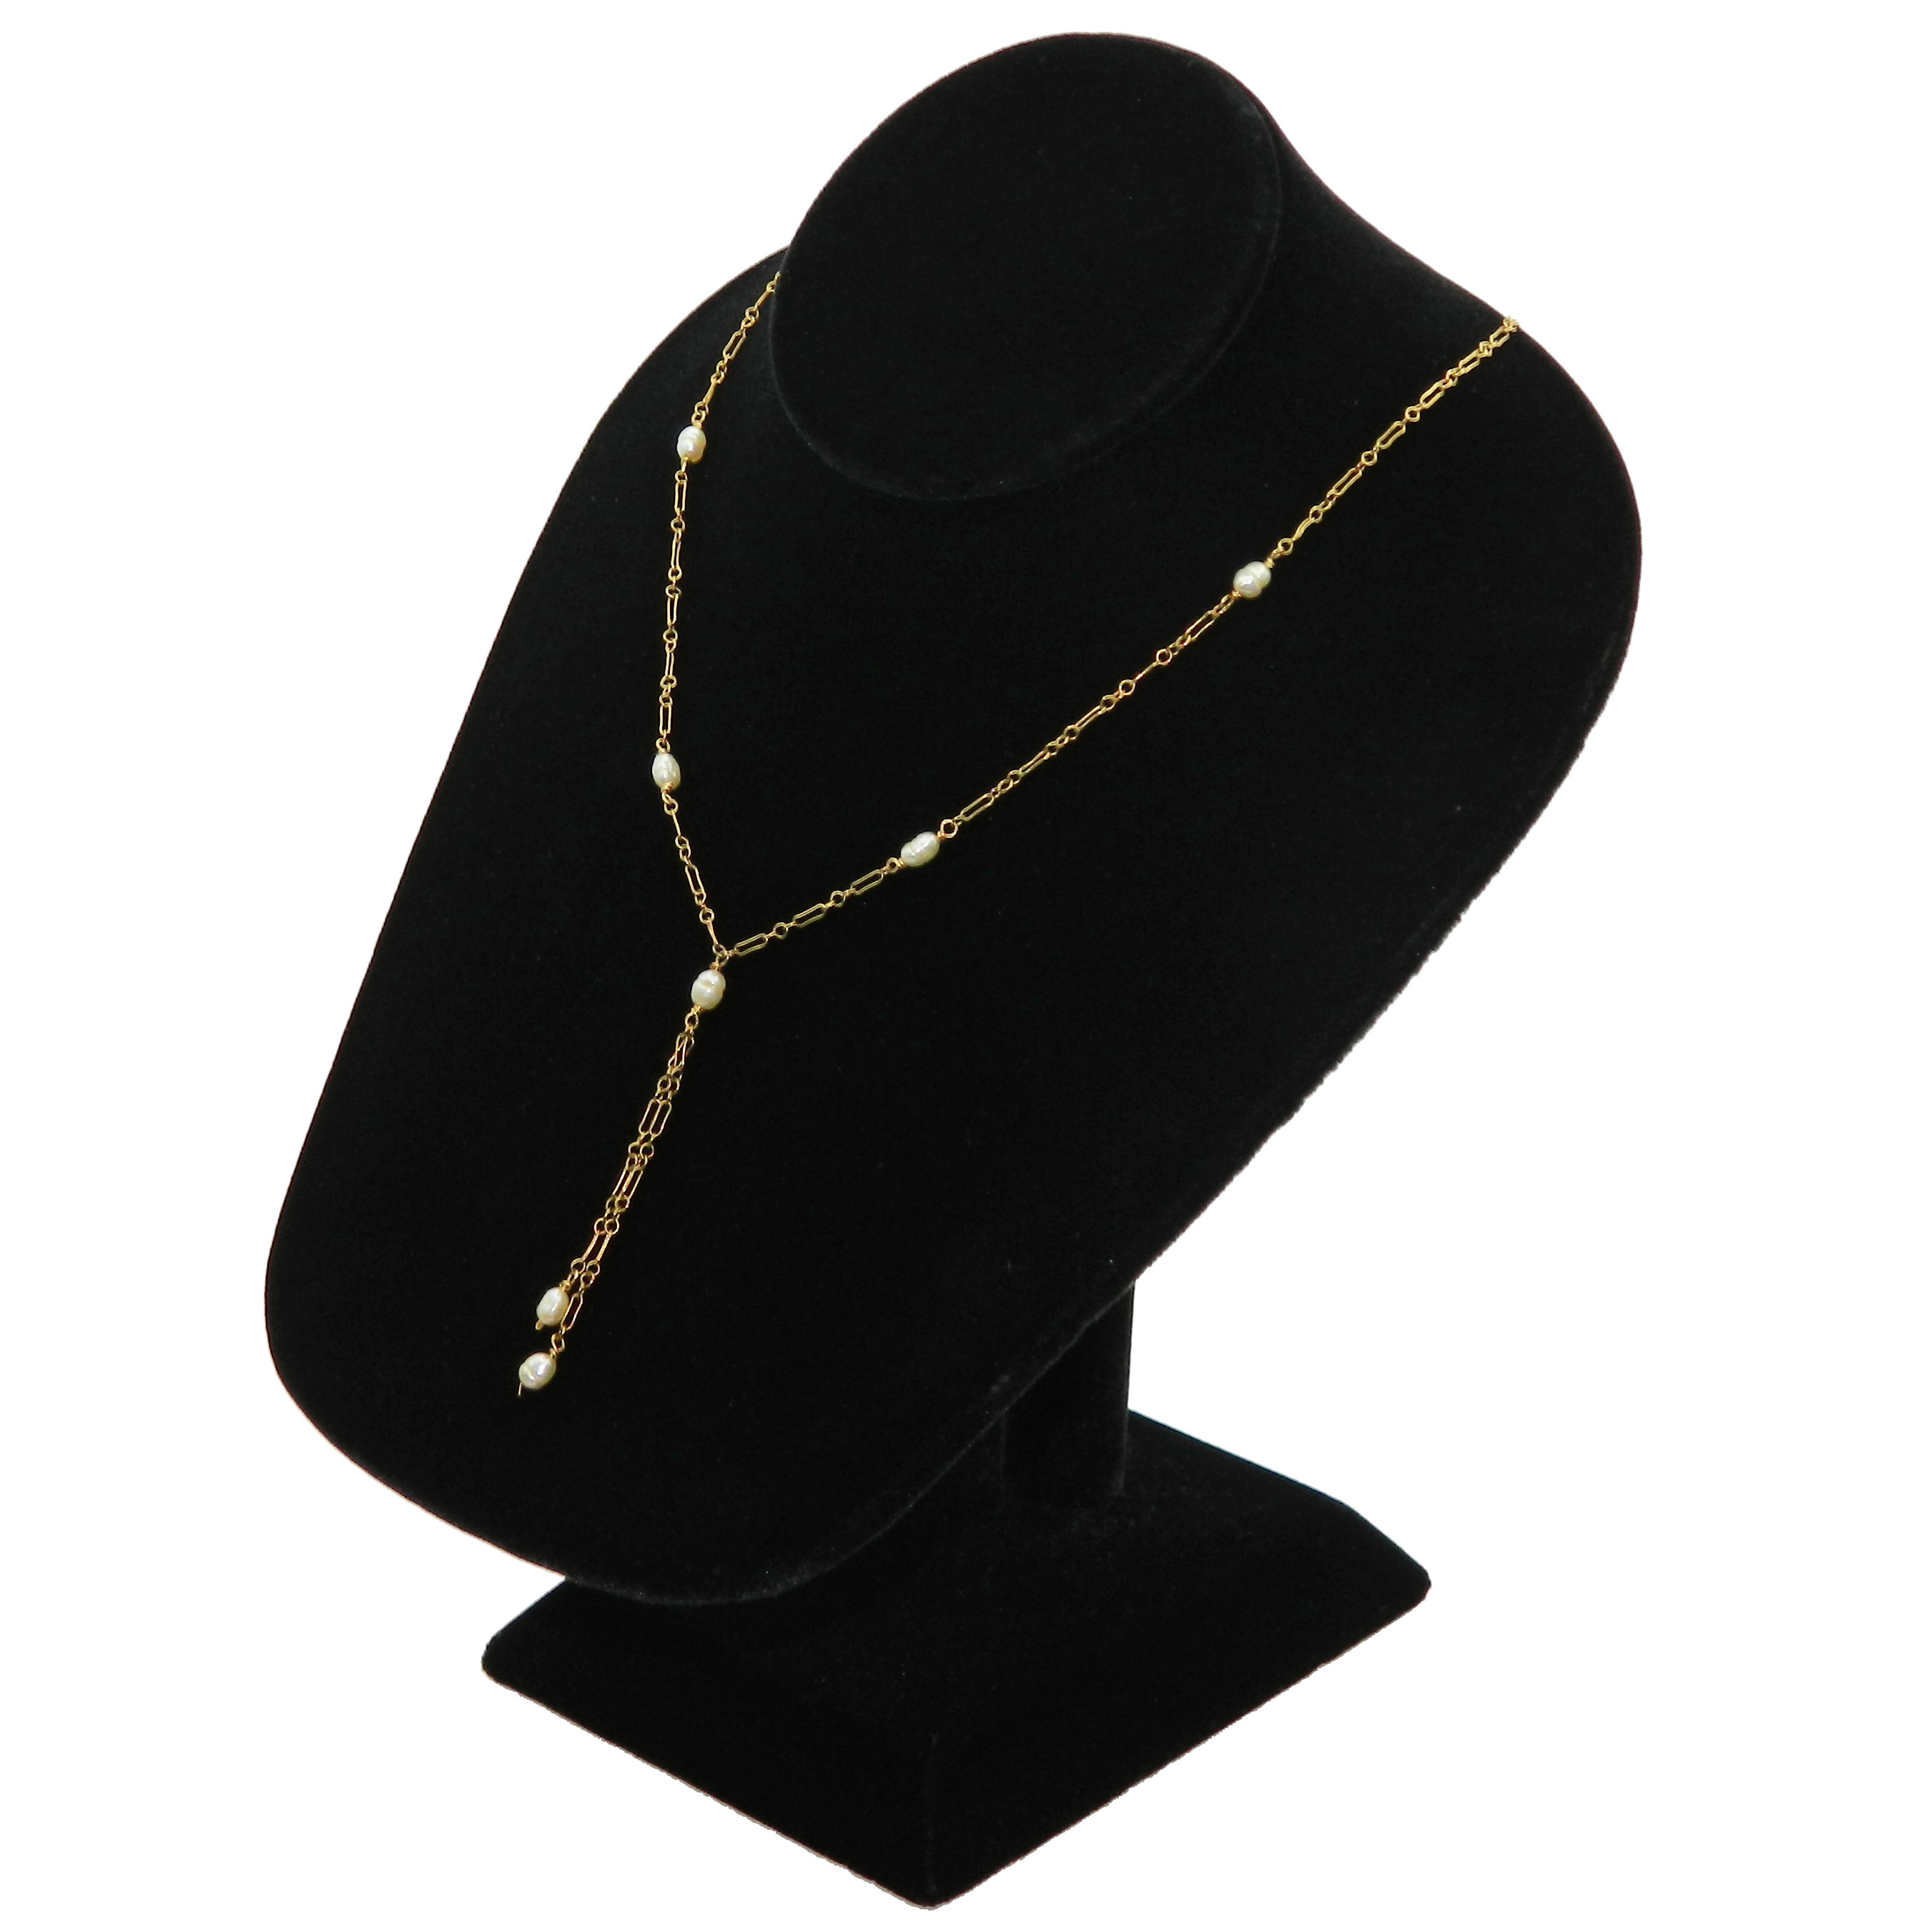 Faux Baroque pearl necklace